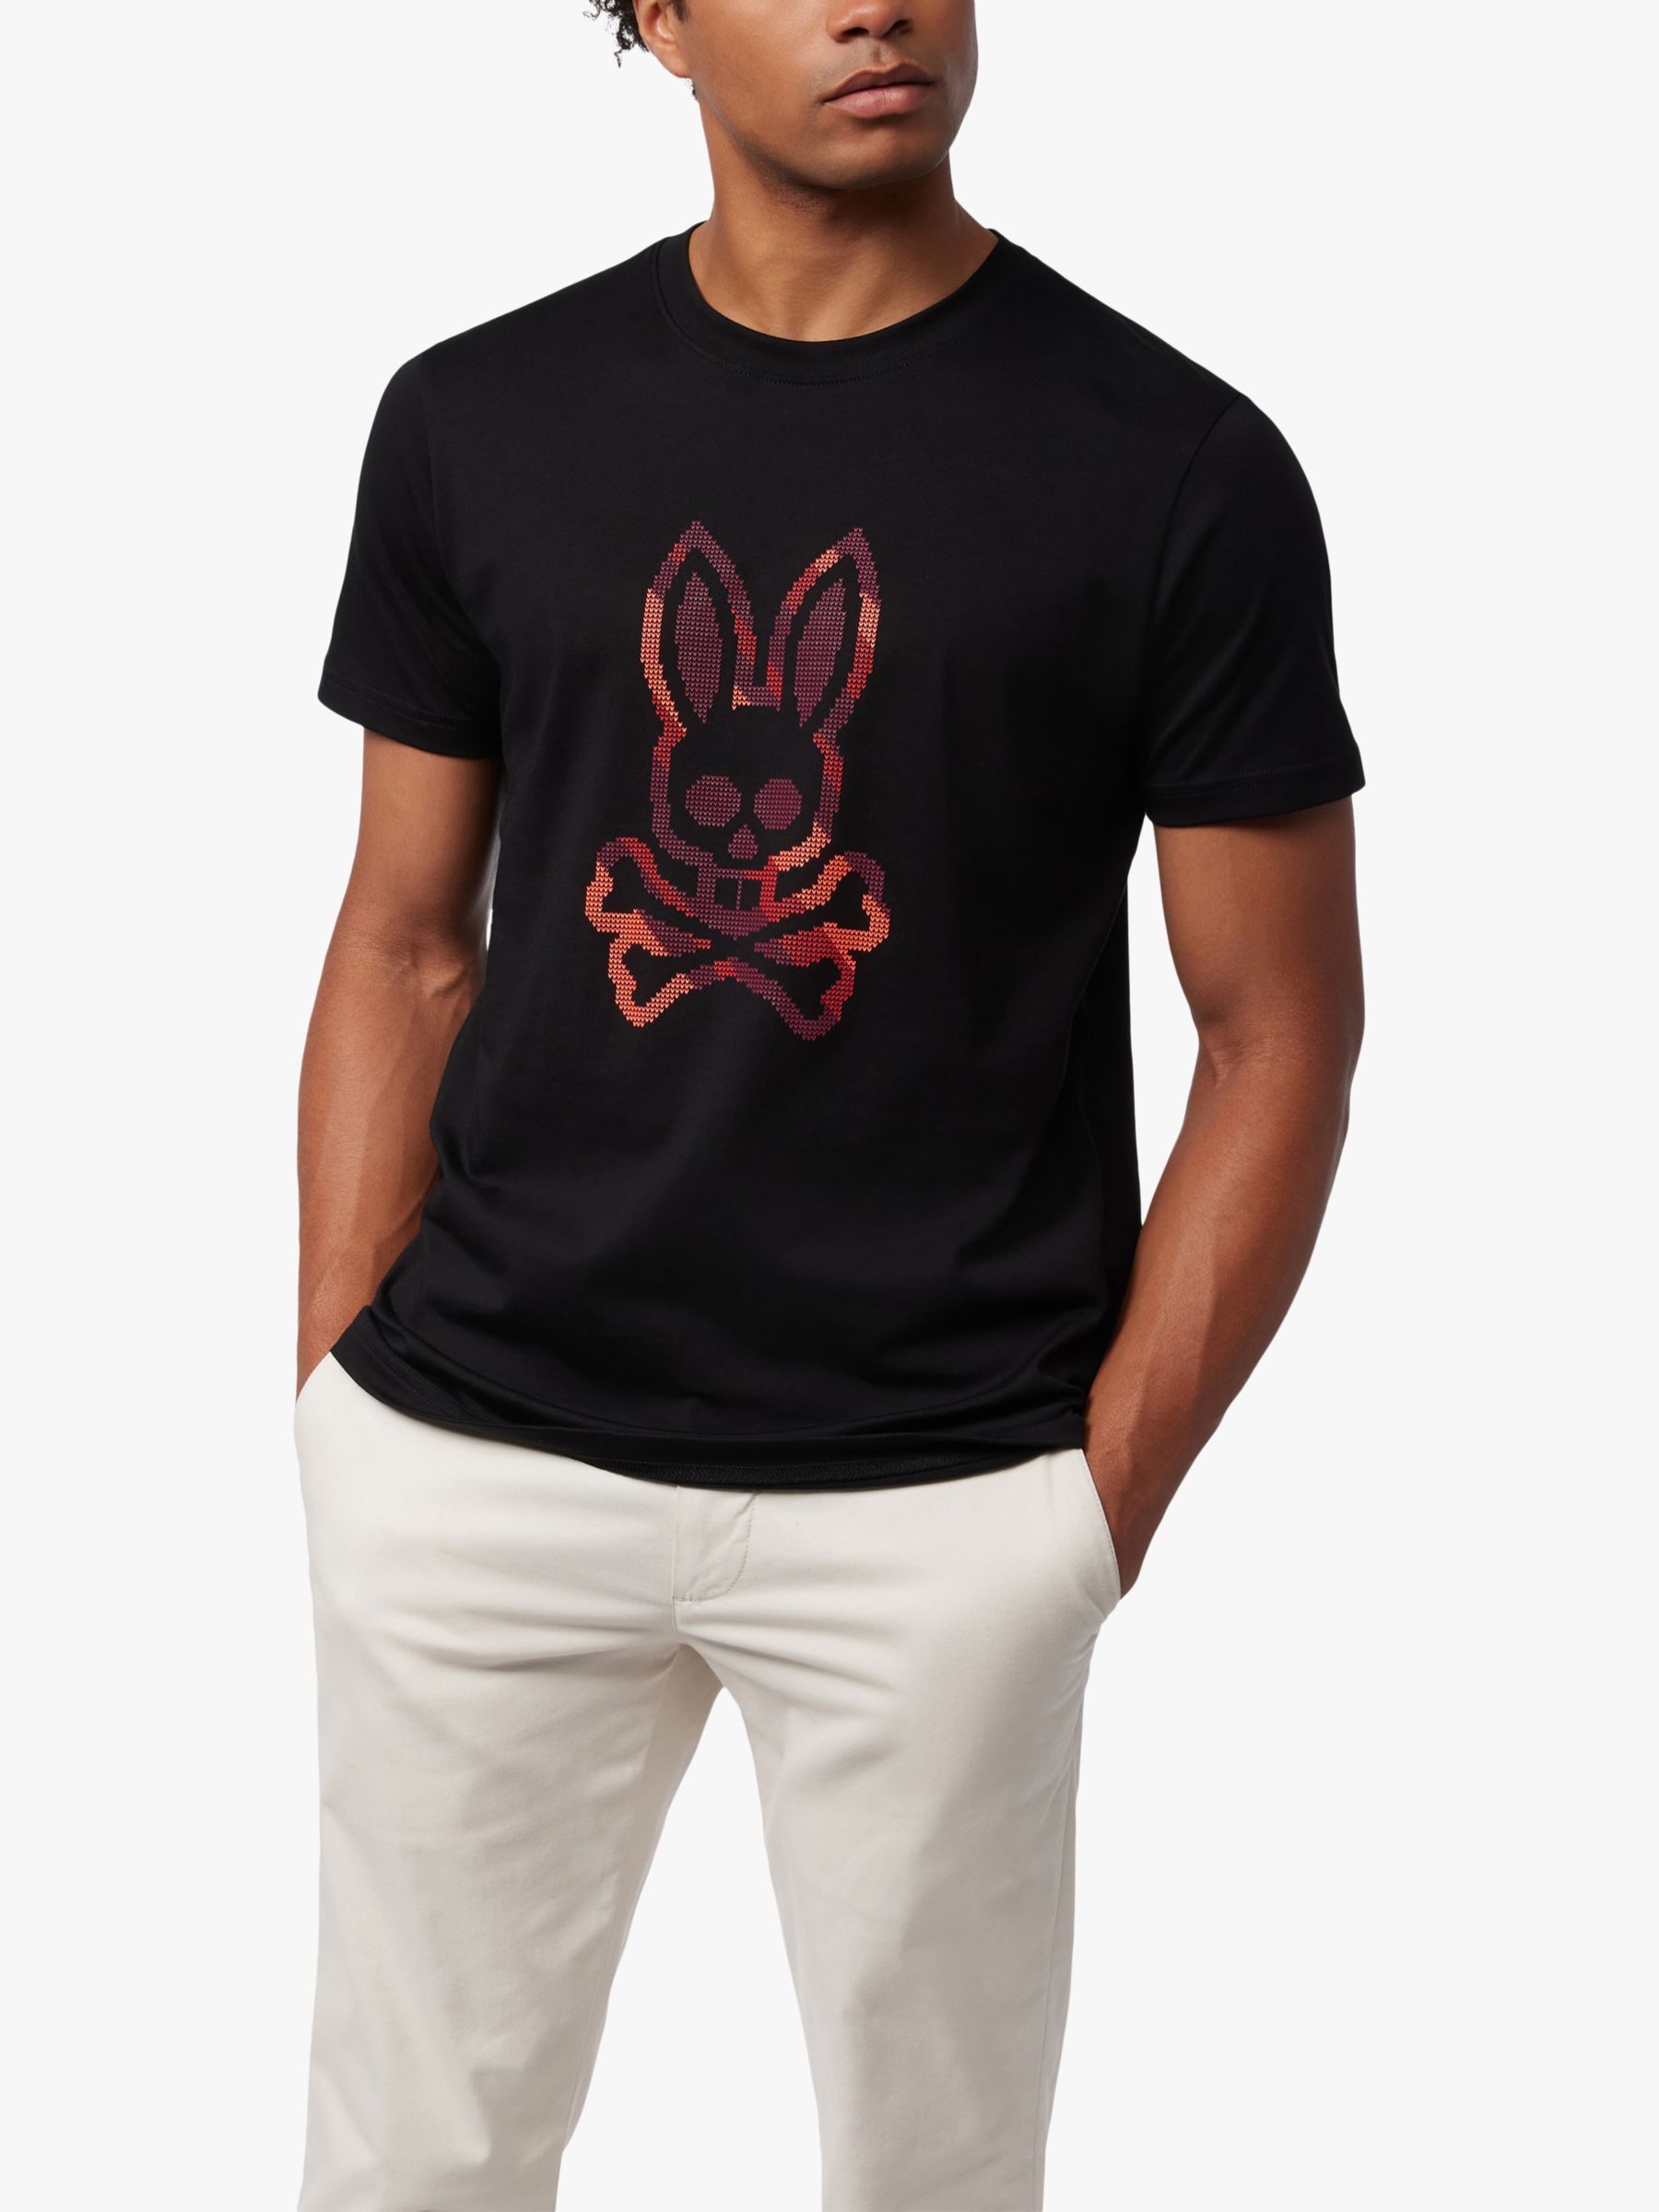 Psycho Bunny Apple Valley Graphic T-Shirt, Black/Multi, S